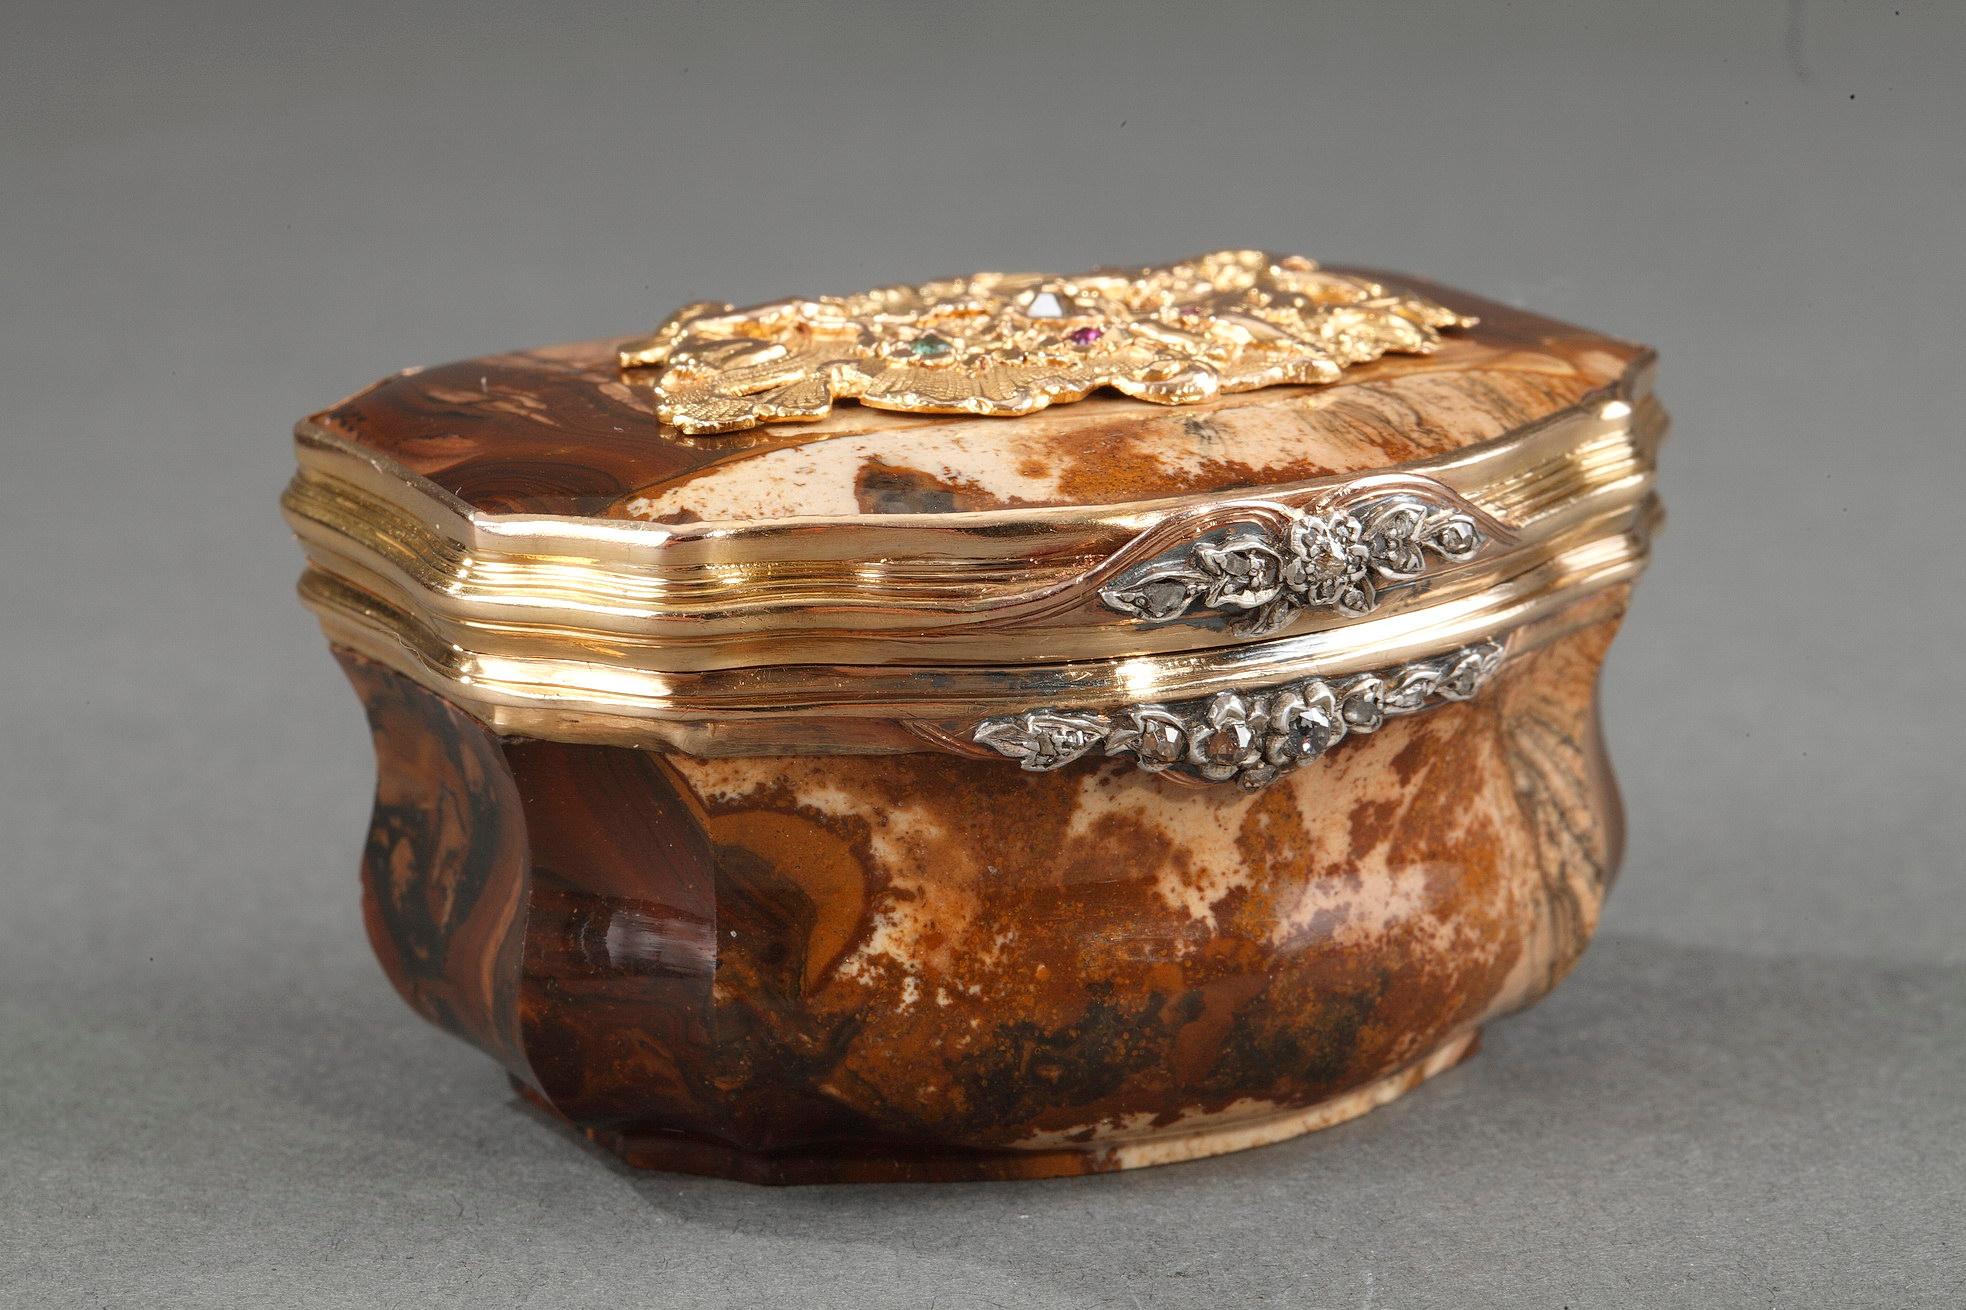 German Gold, Agate and Gemstones Snuffbox, 18th Century